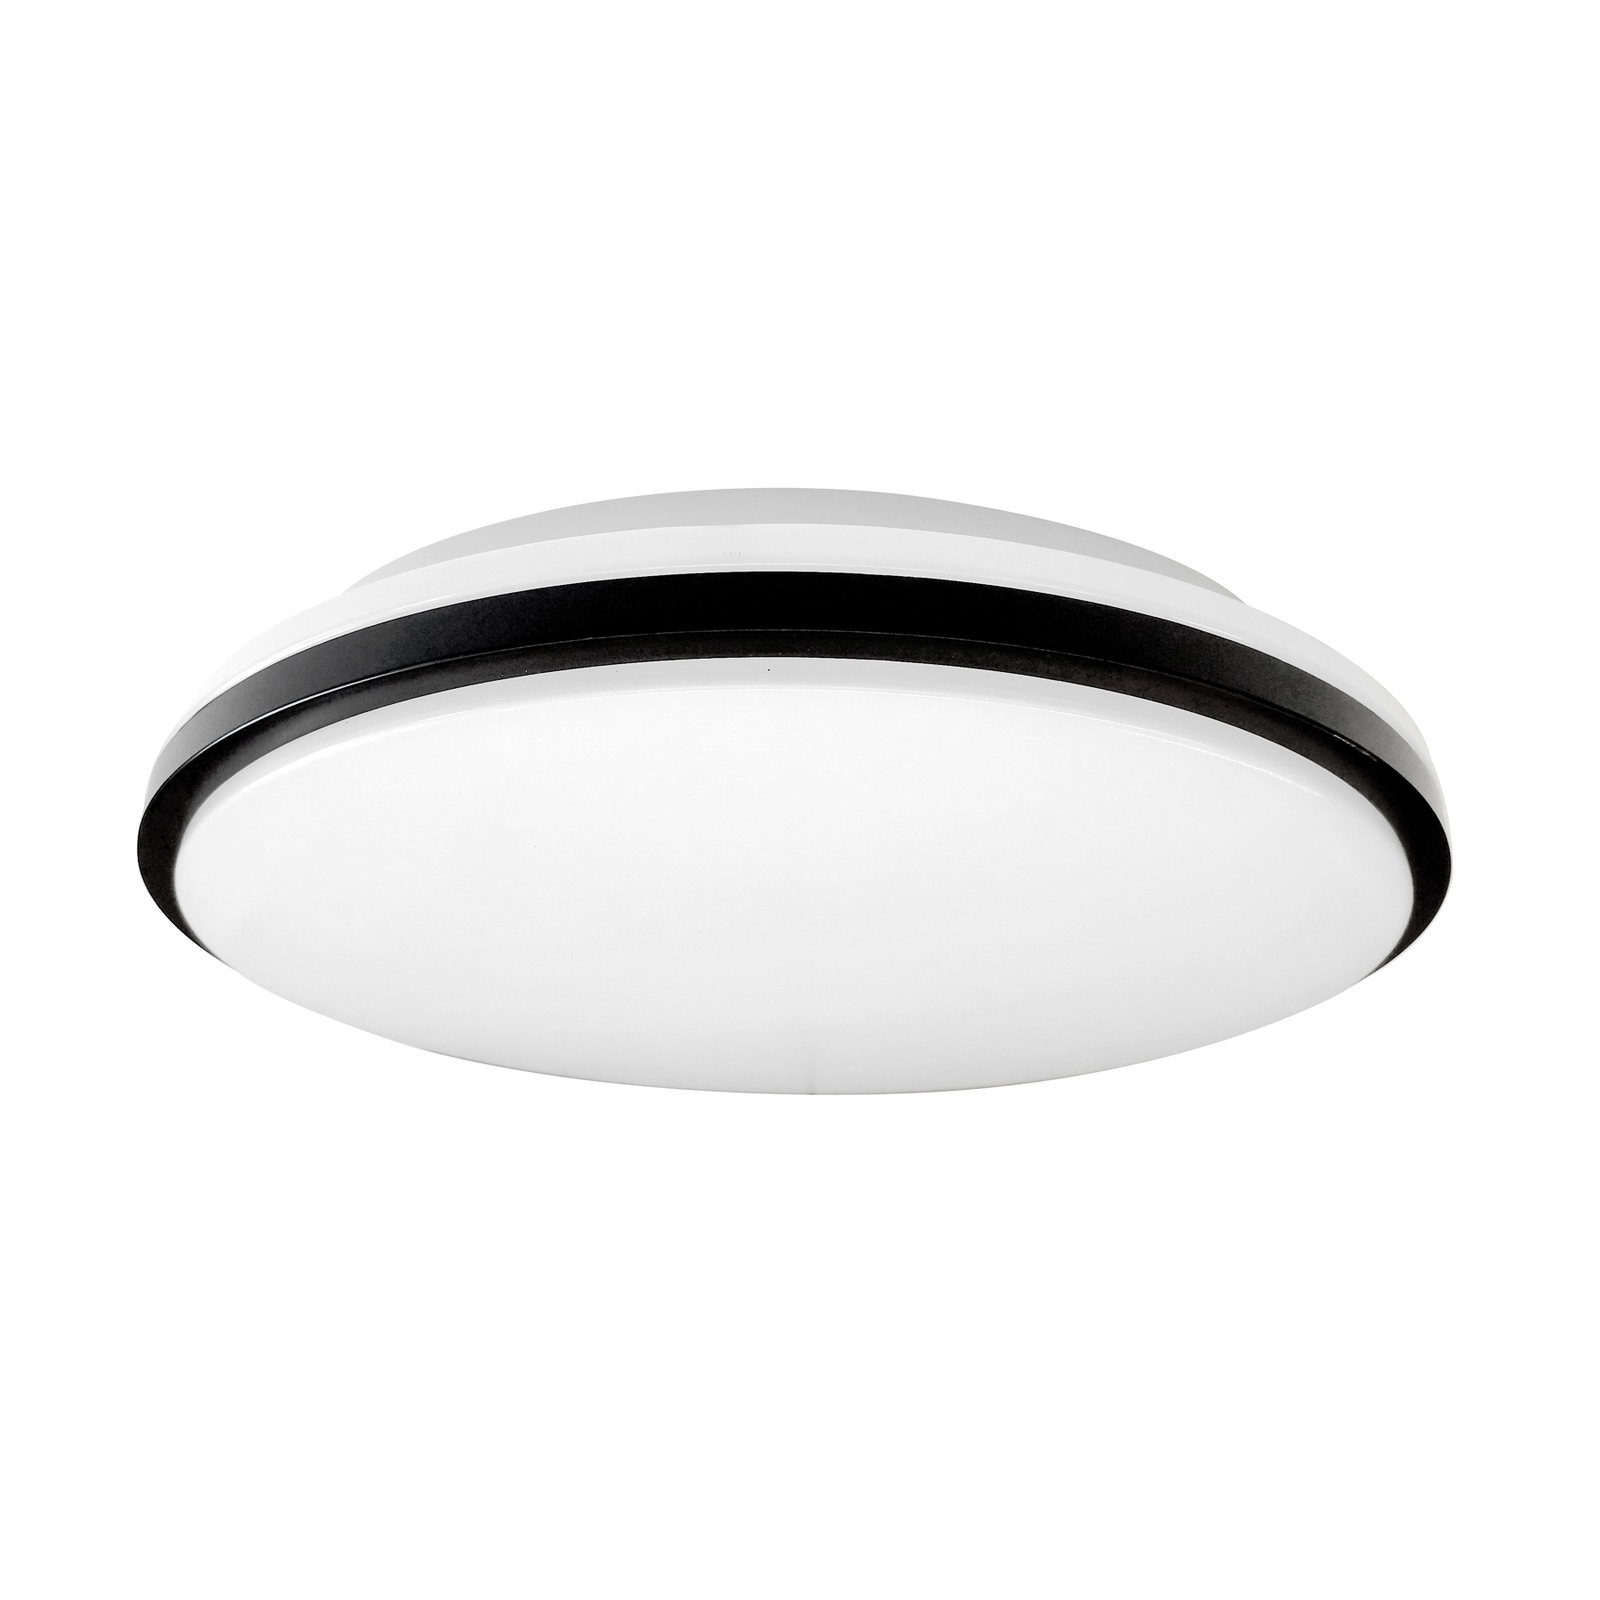 Müller Licht Taro Round LED plafonnier CCT Ø 39cm